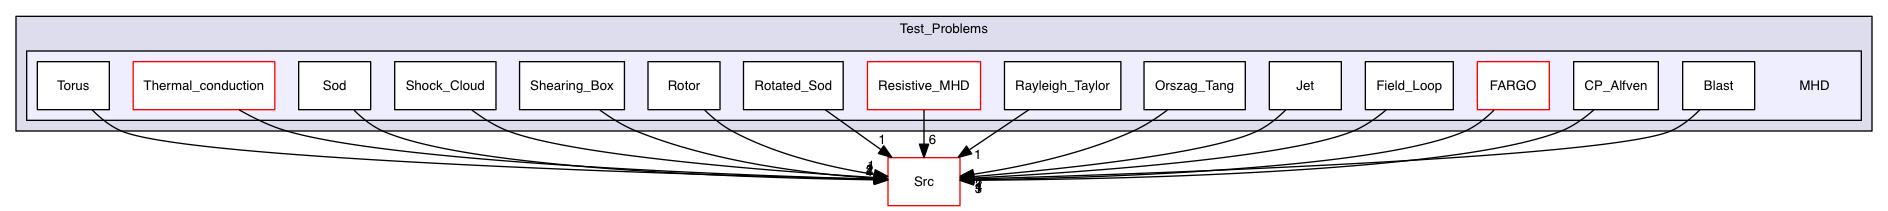 Test_Problems/MHD